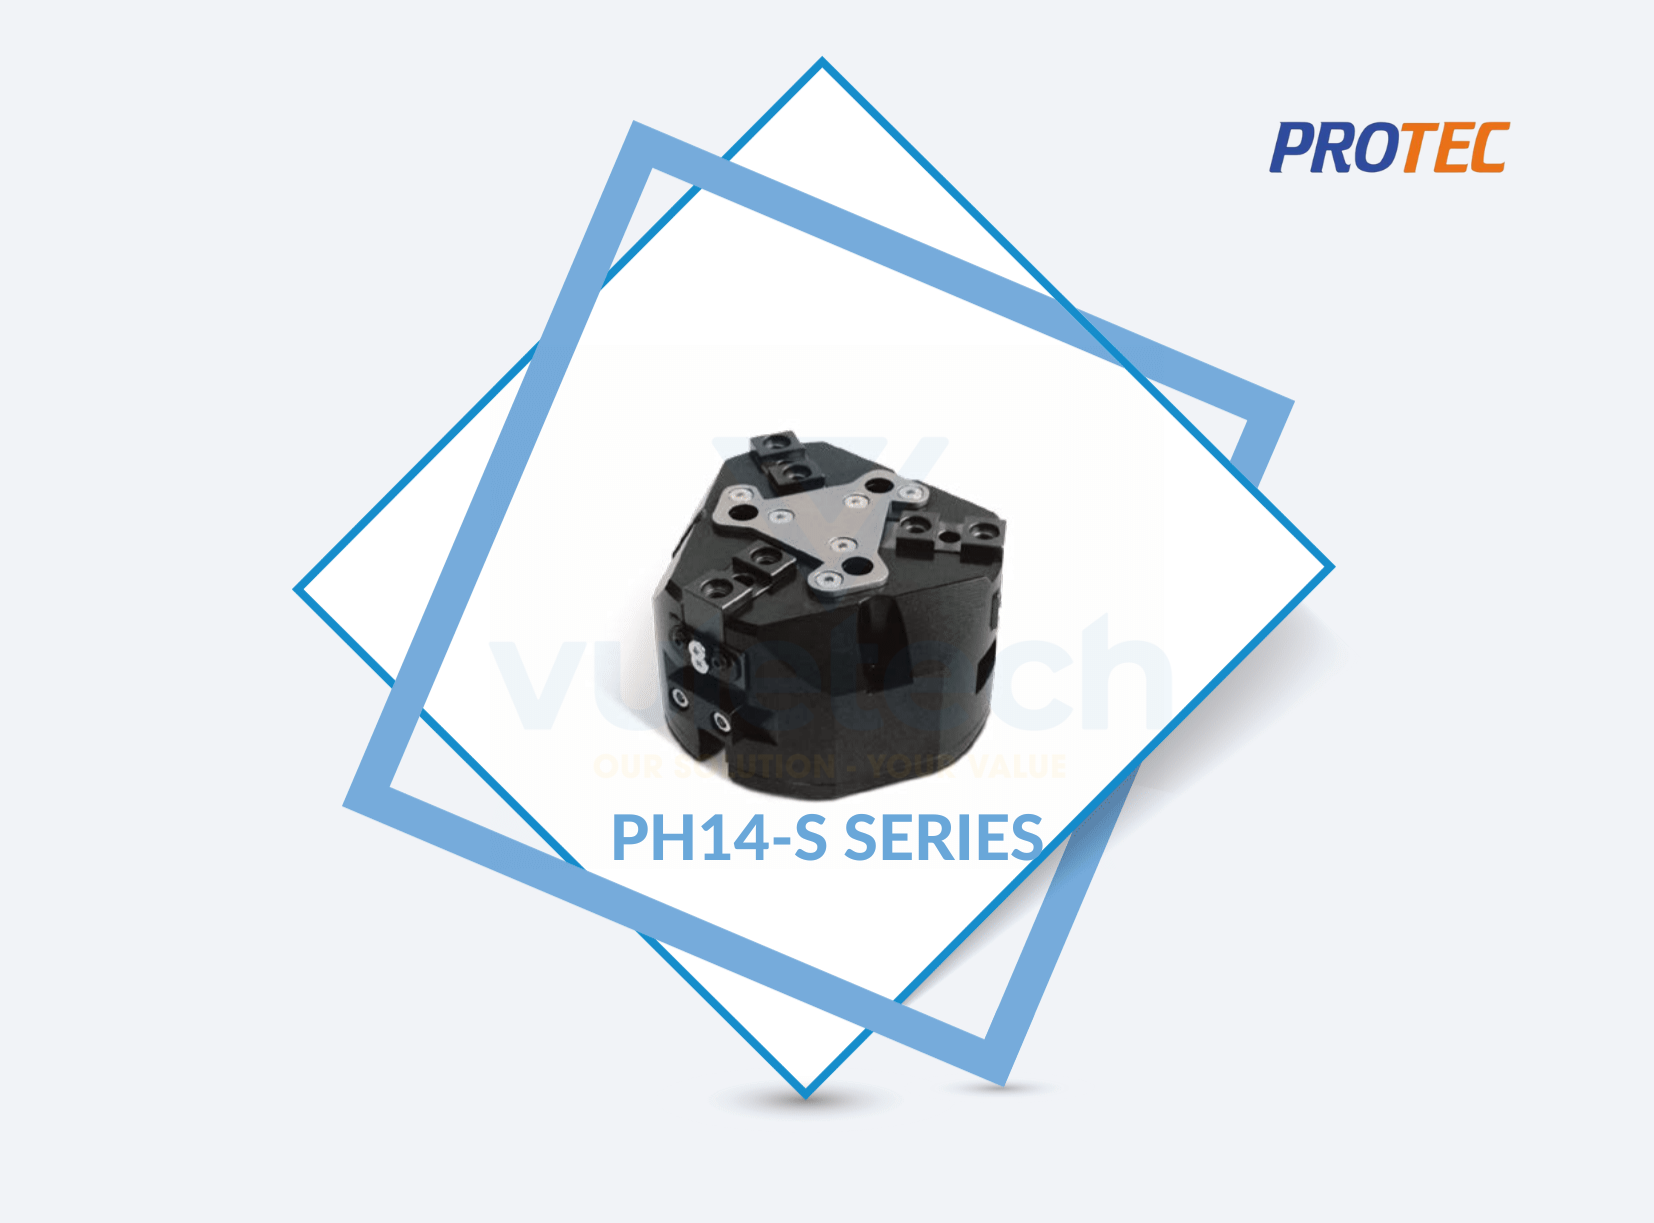 PH14-S Series Protec